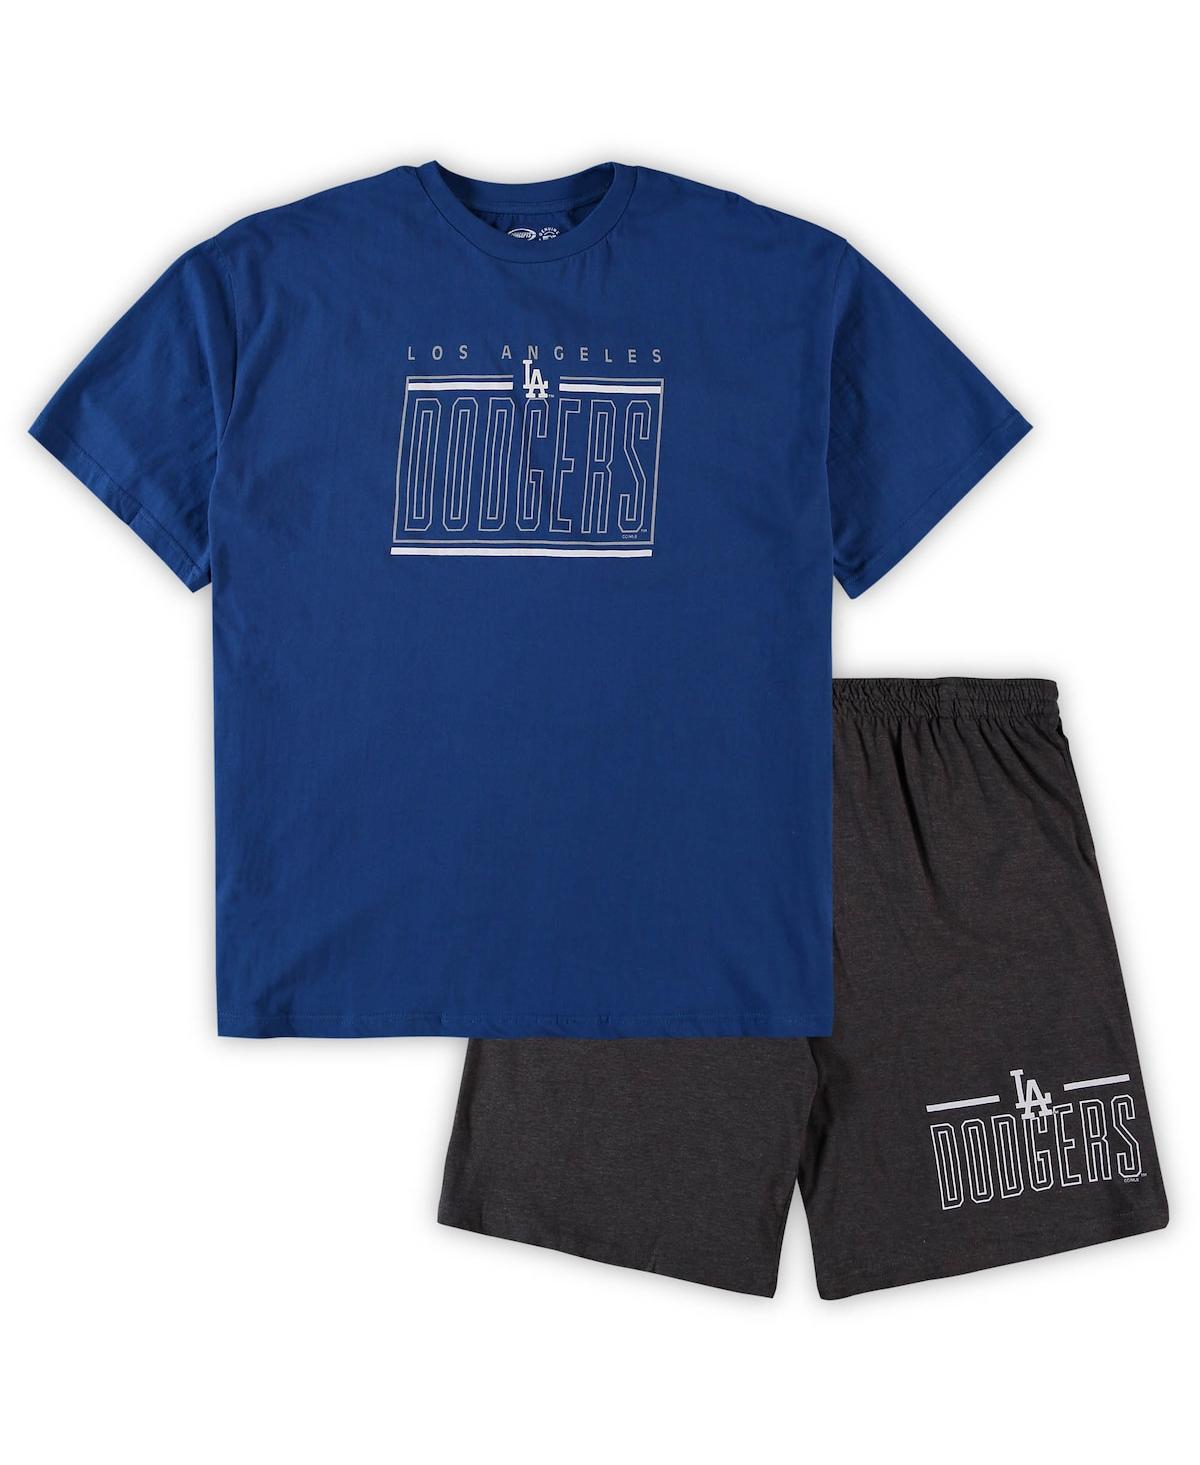 Men's Concepts Sport Royal, Charcoal Los Angeles Dodgers Big and Tall T-shirt and Shorts Sleep Set - Royal, Charcoal